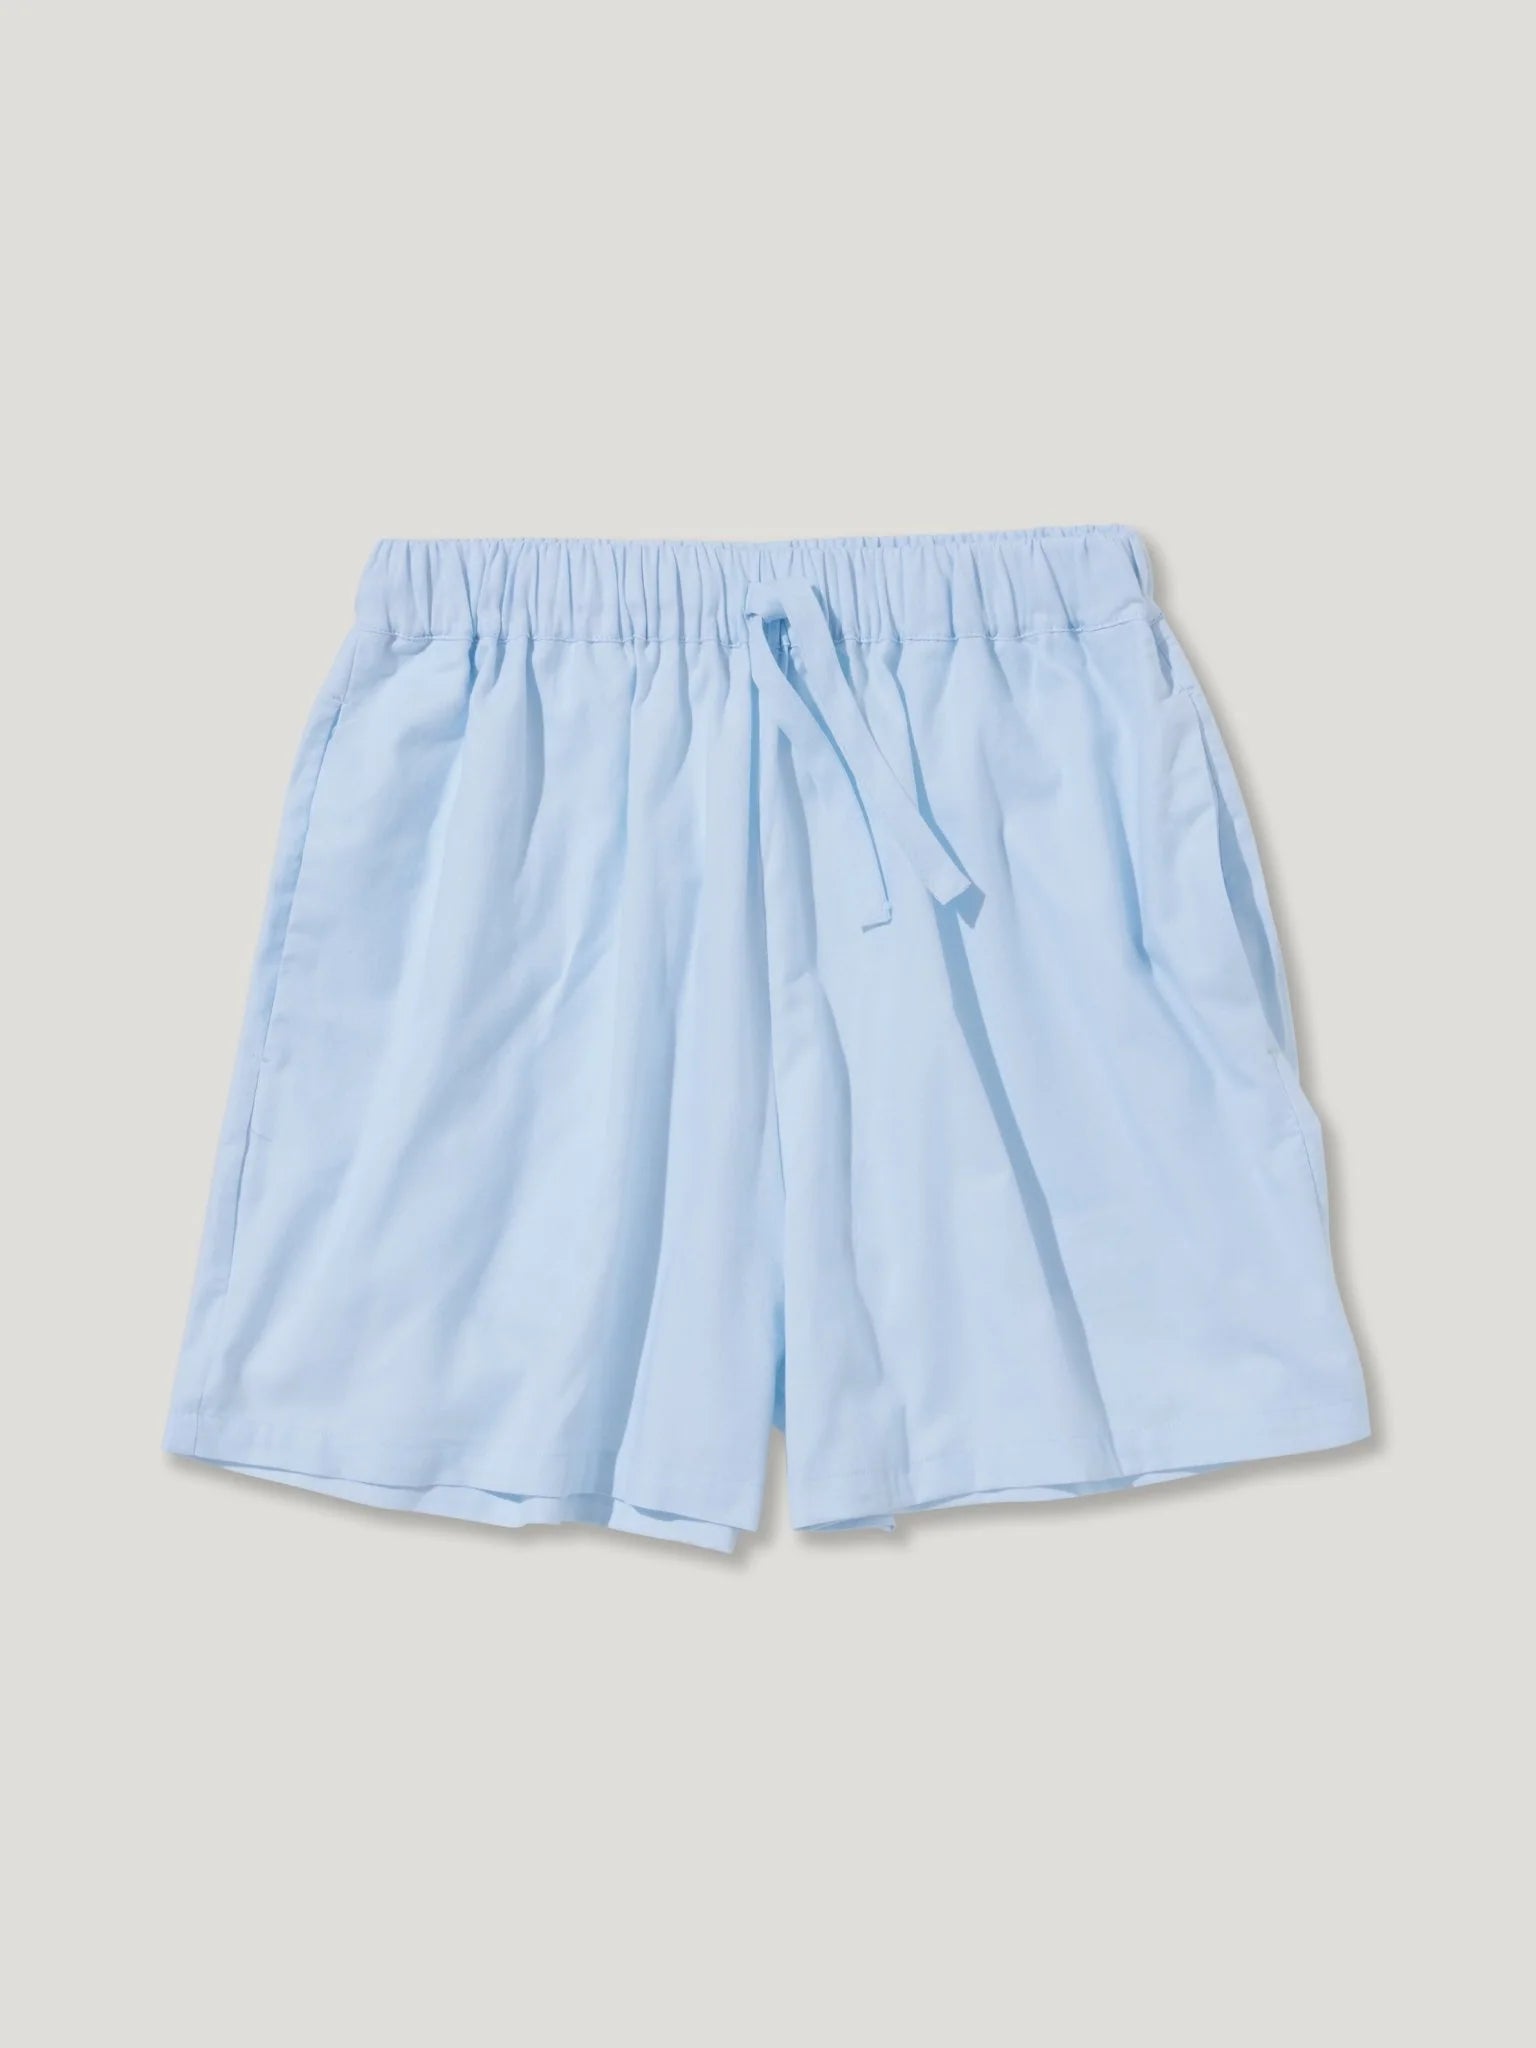 Helena shorts in light blue